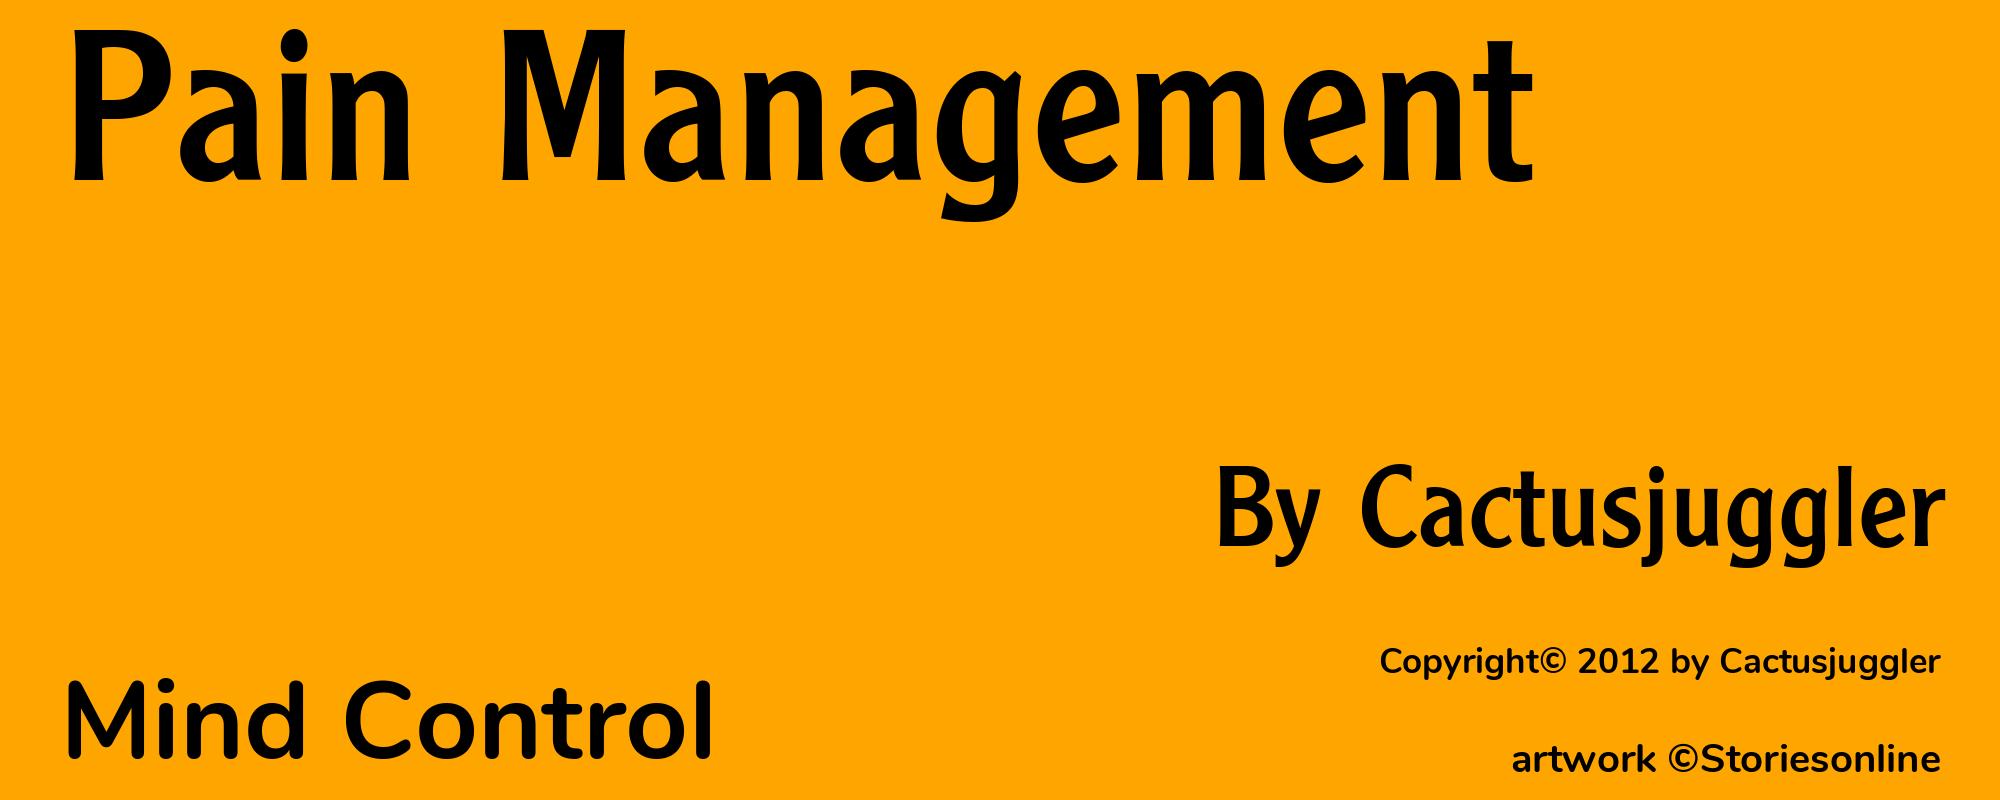 Pain Management - Cover